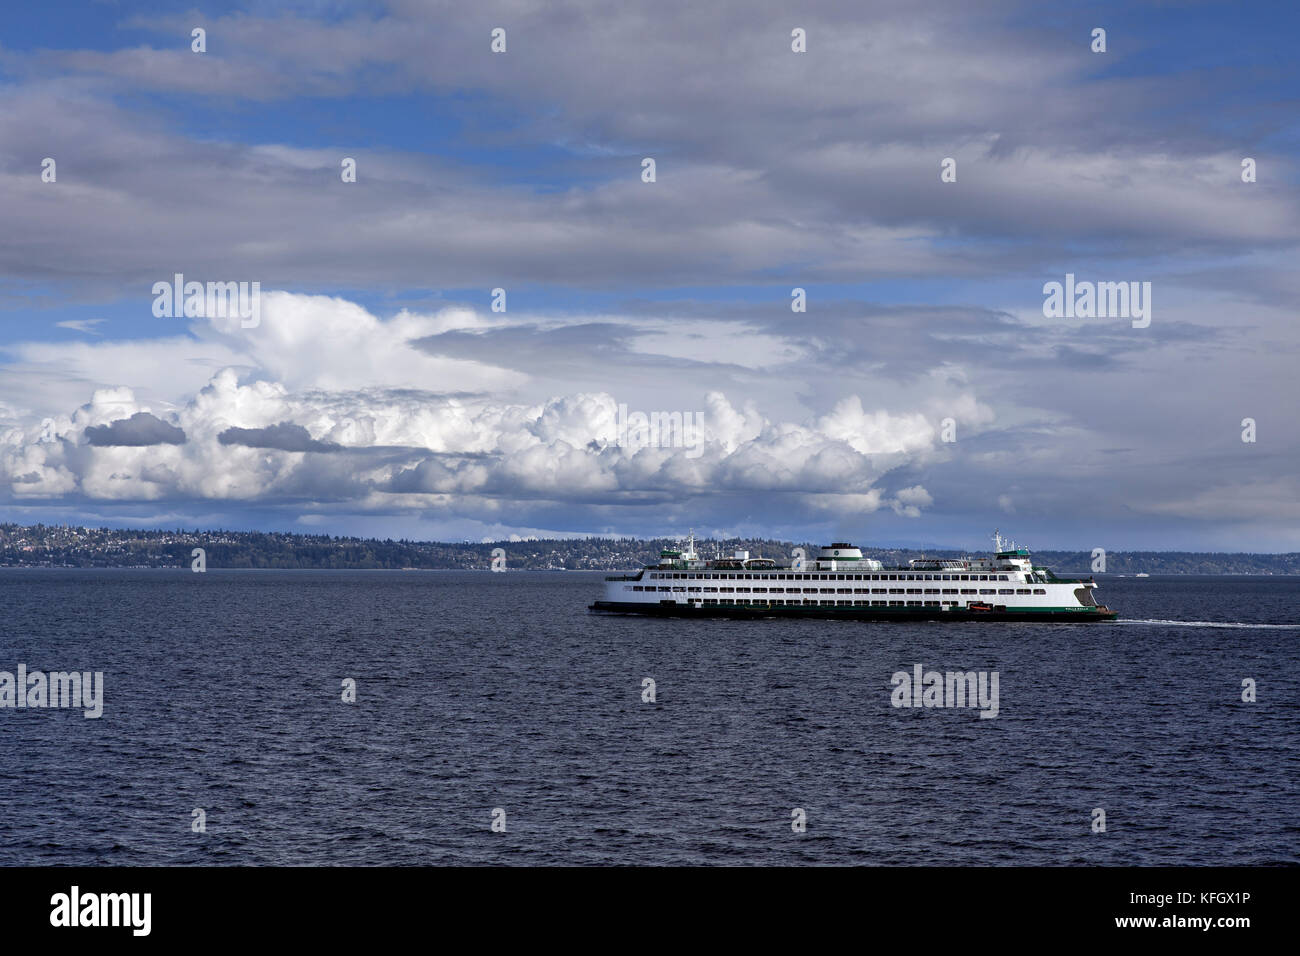 WA14055-00...WASHINGTON - Ferry boat crossing the Puget Sound near Seattle. Stock Photo